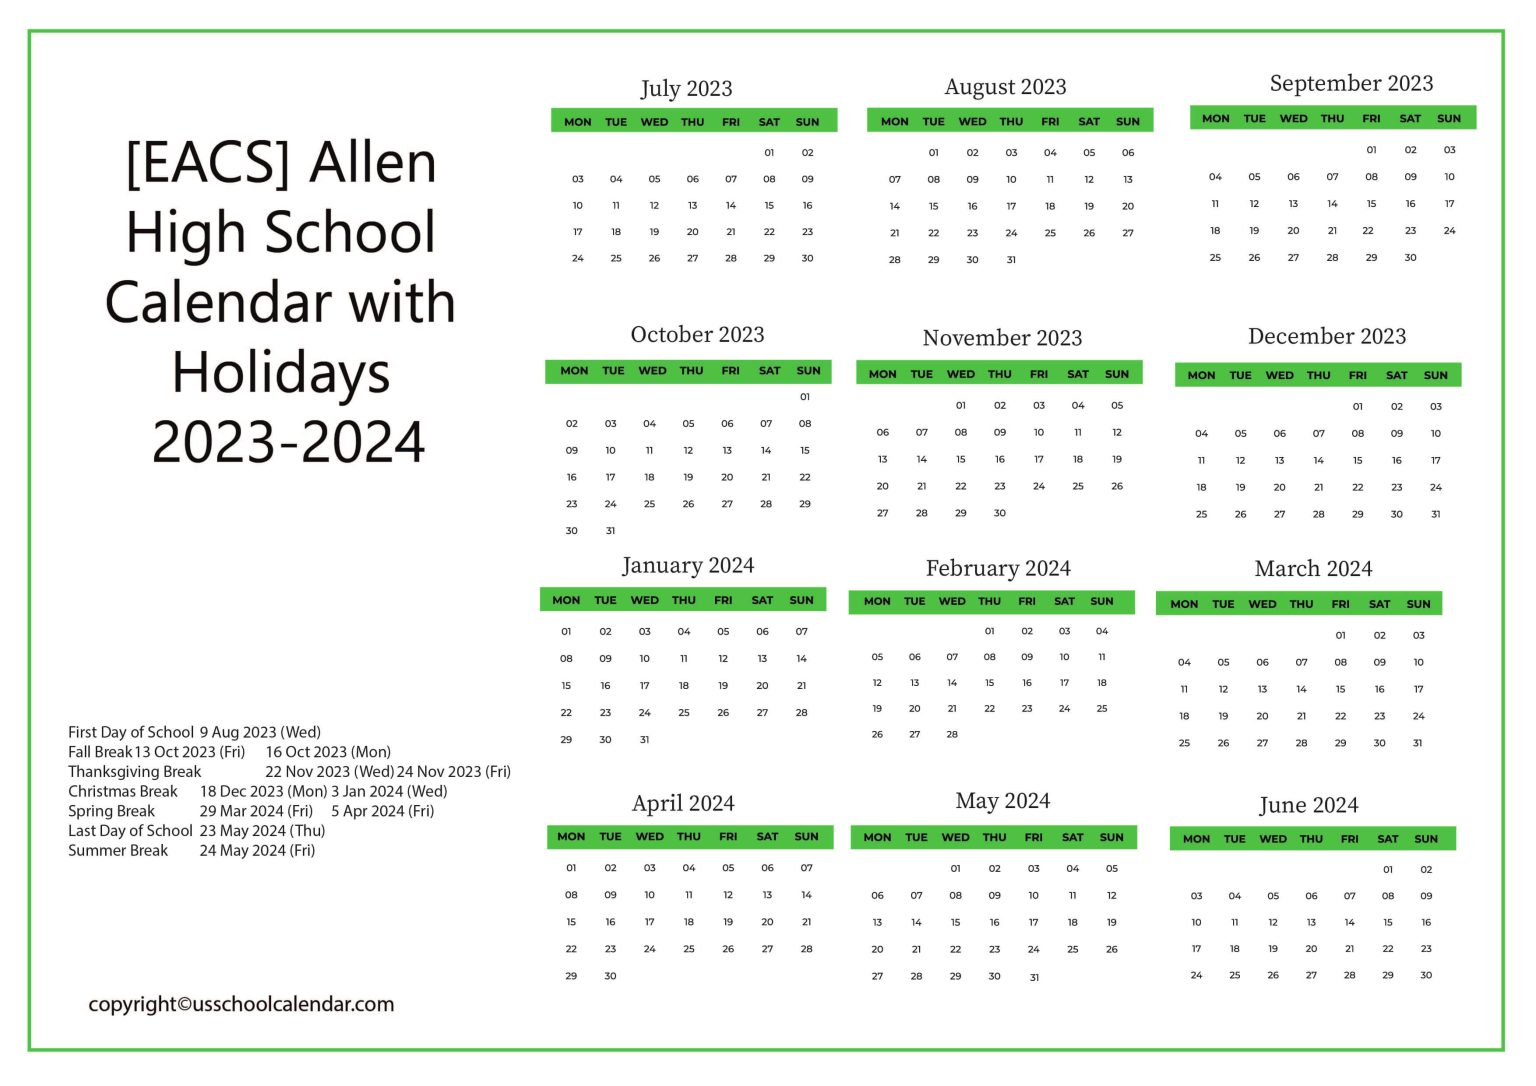 EACS Allen High School Calendar with Holidays 2023 2024